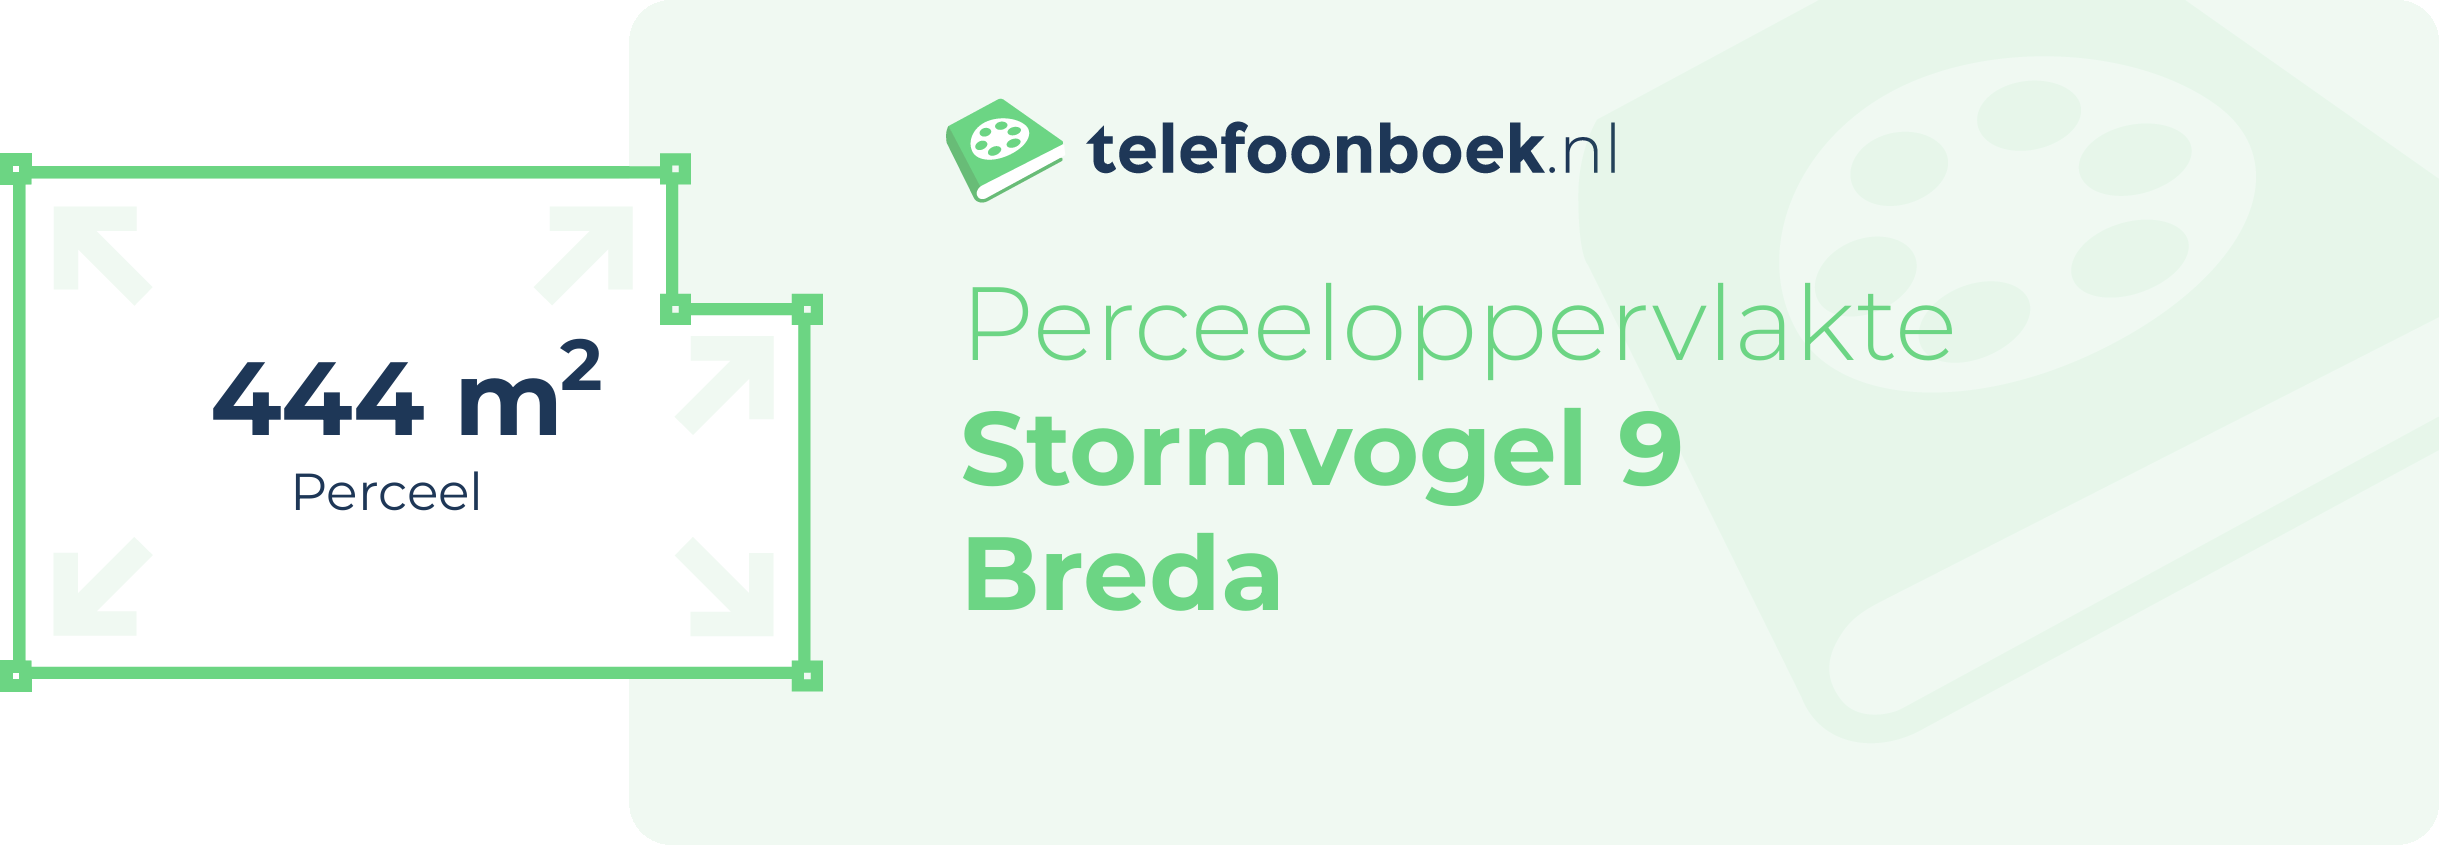 Perceeloppervlakte Stormvogel 9 Breda